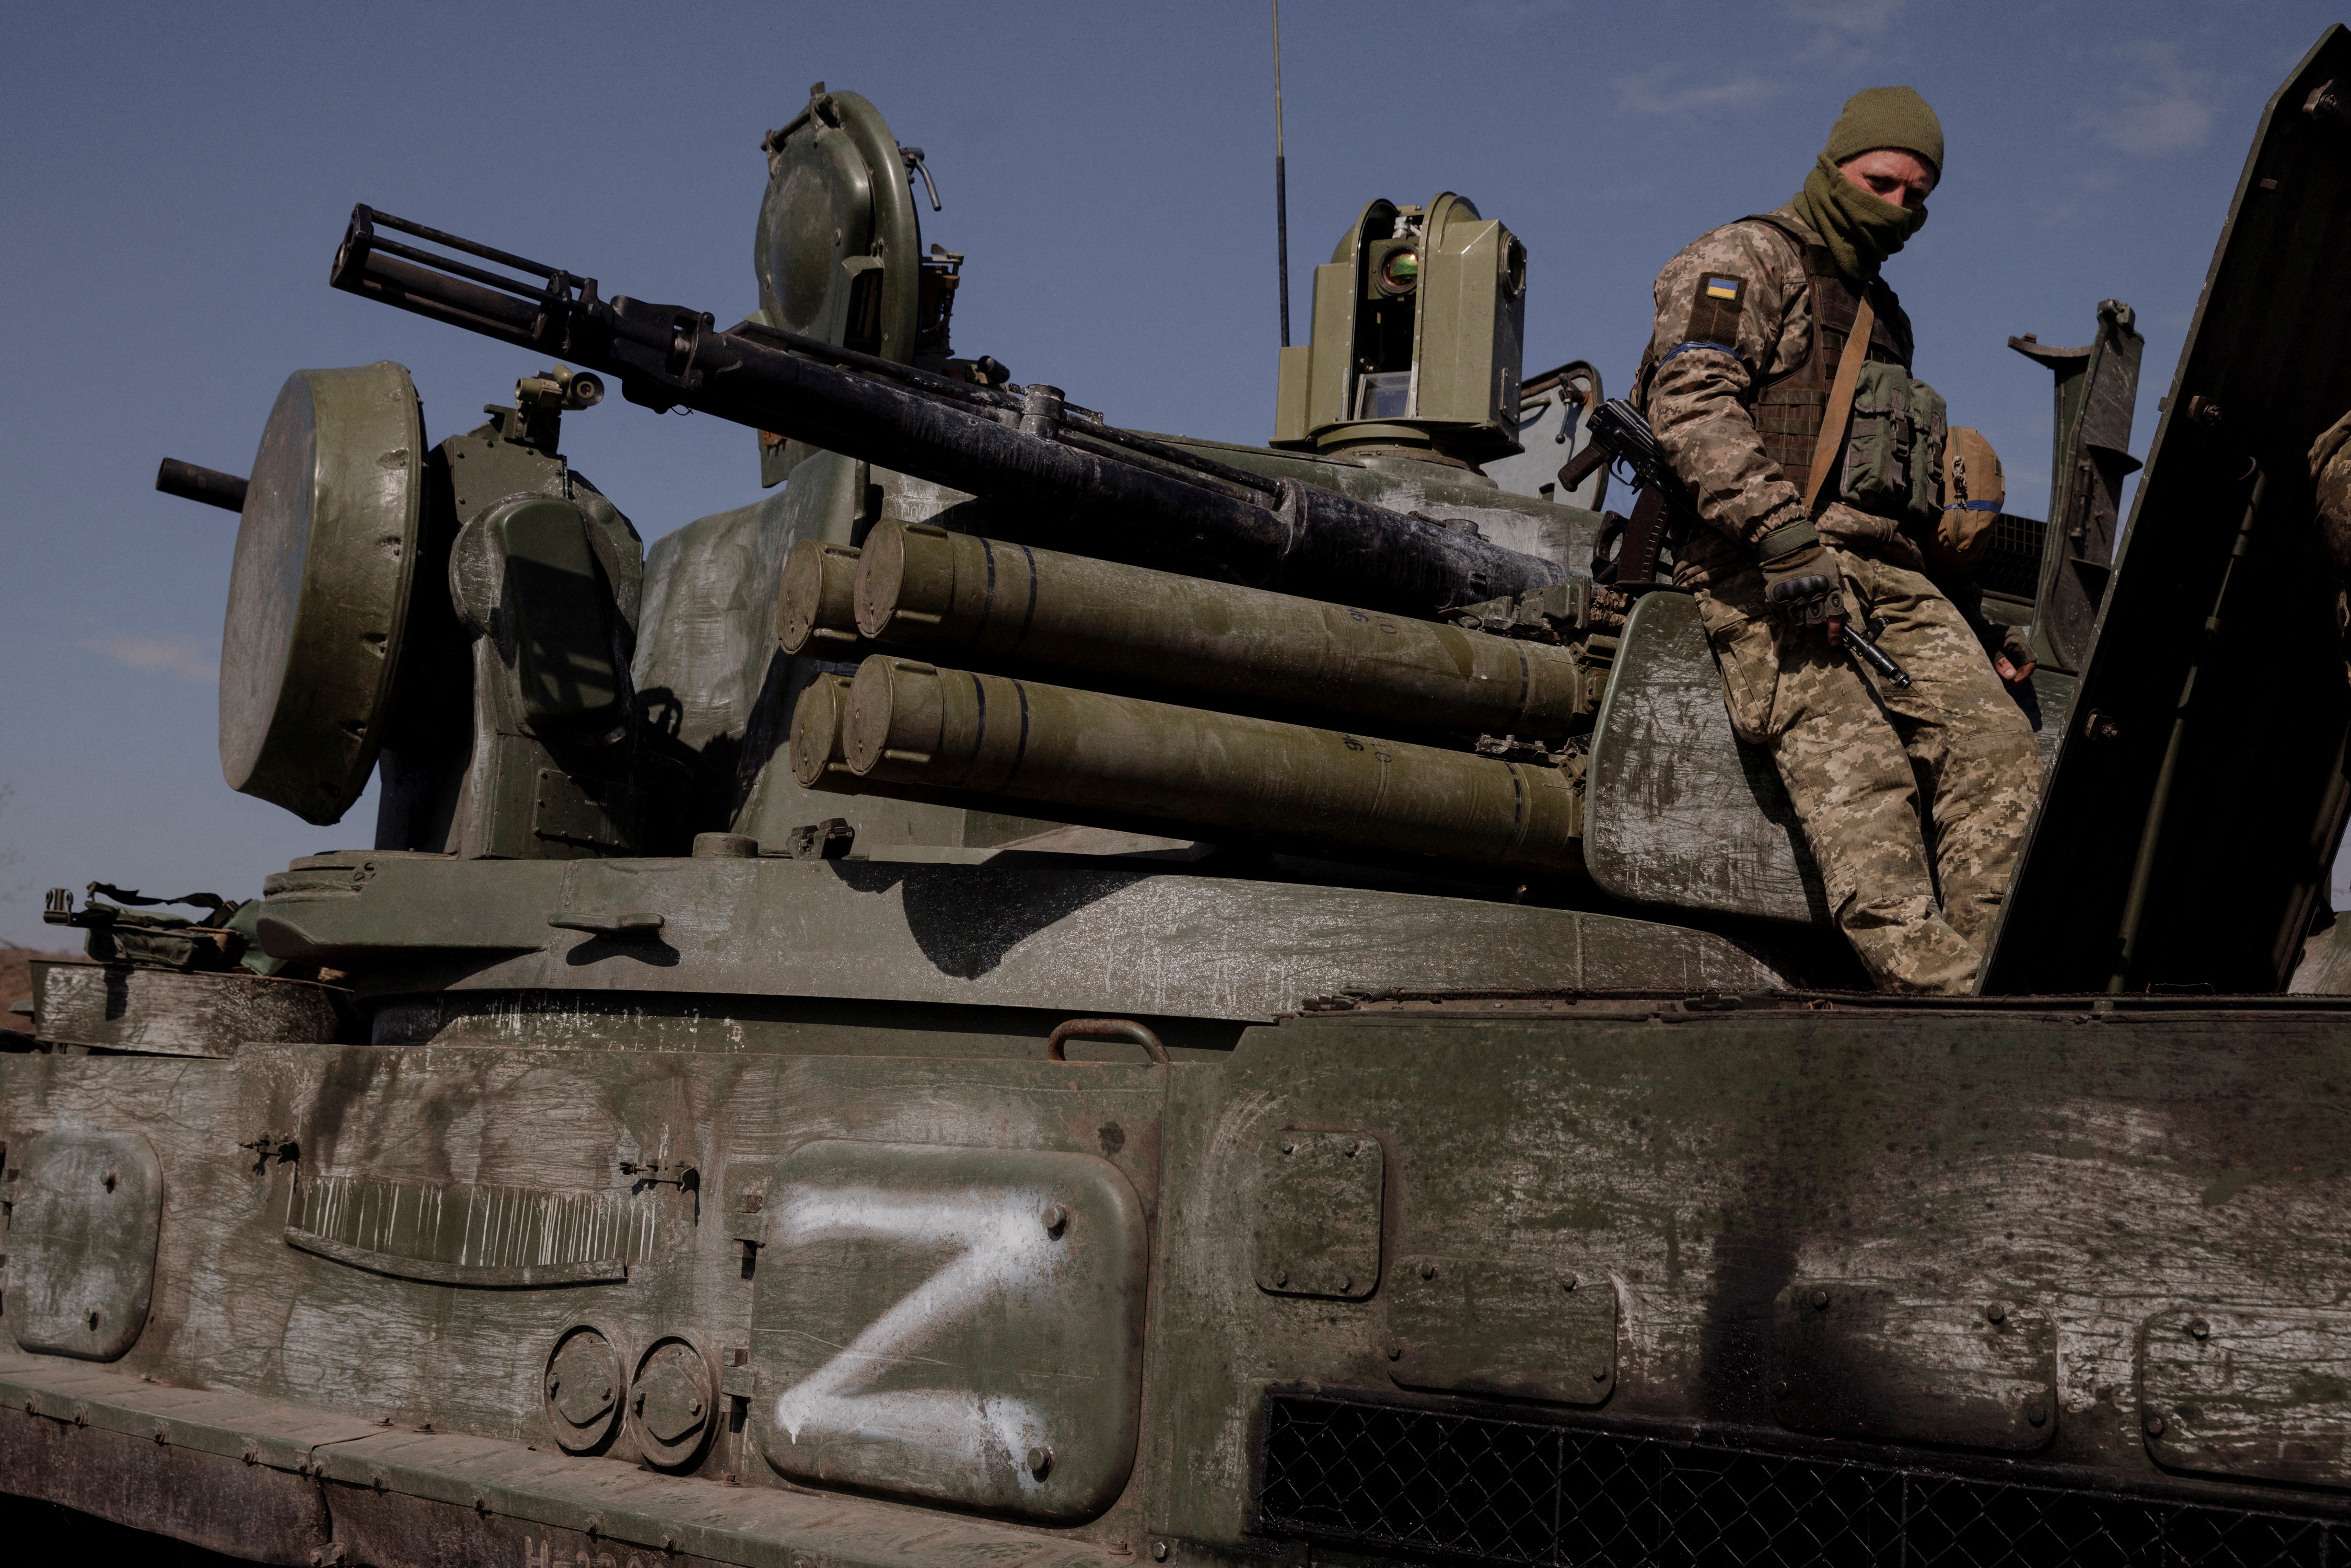 Uncadio Ukrainian sobre a tanque ruso capture (REUTERS / Thomas Peter / archive)